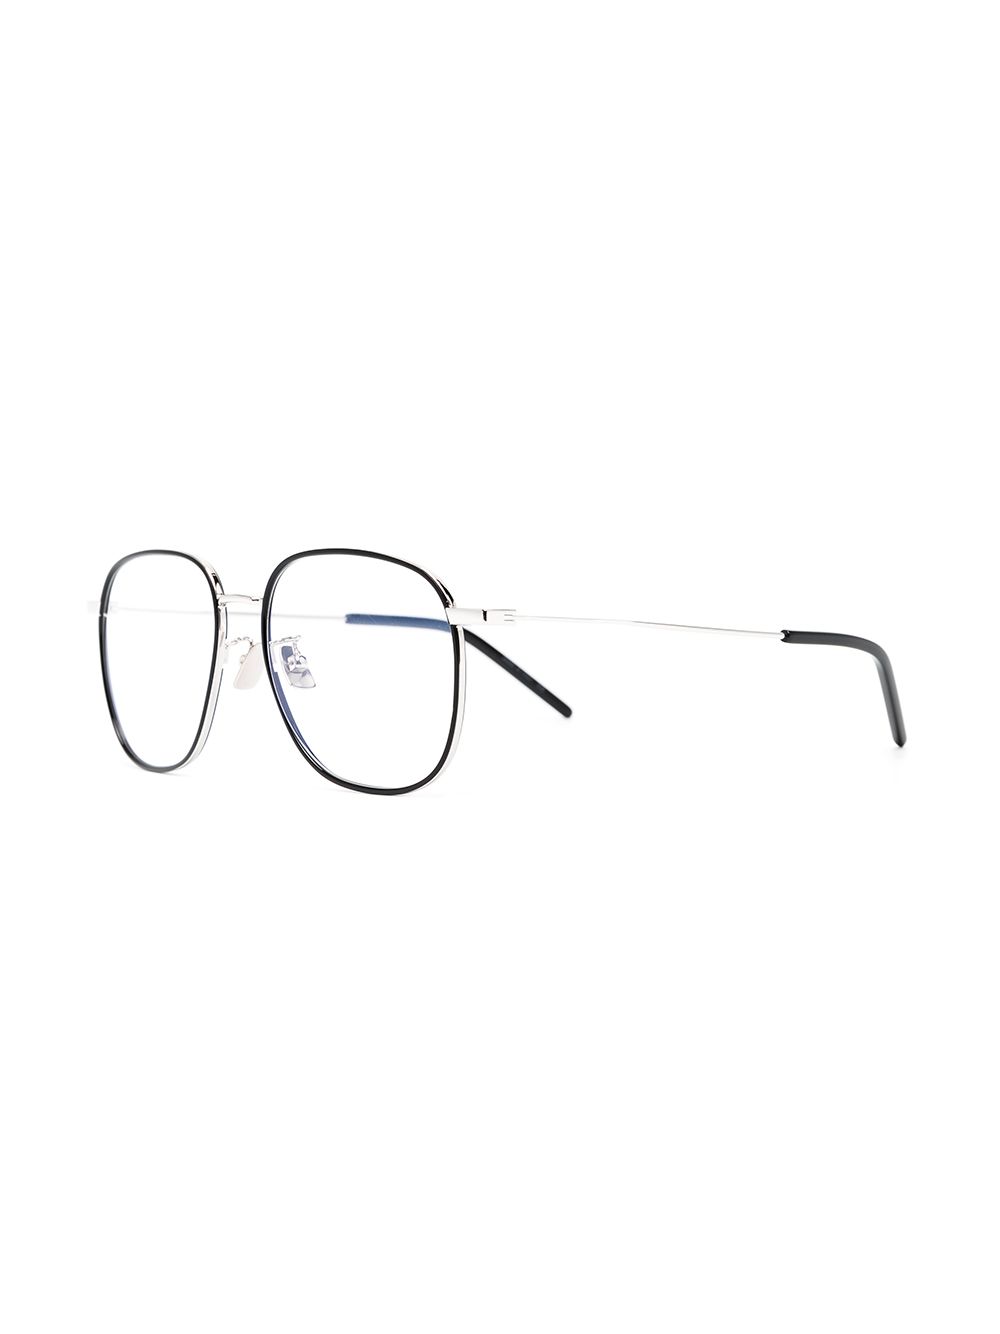 фото Saint laurent eyewear очки в круглой оправе